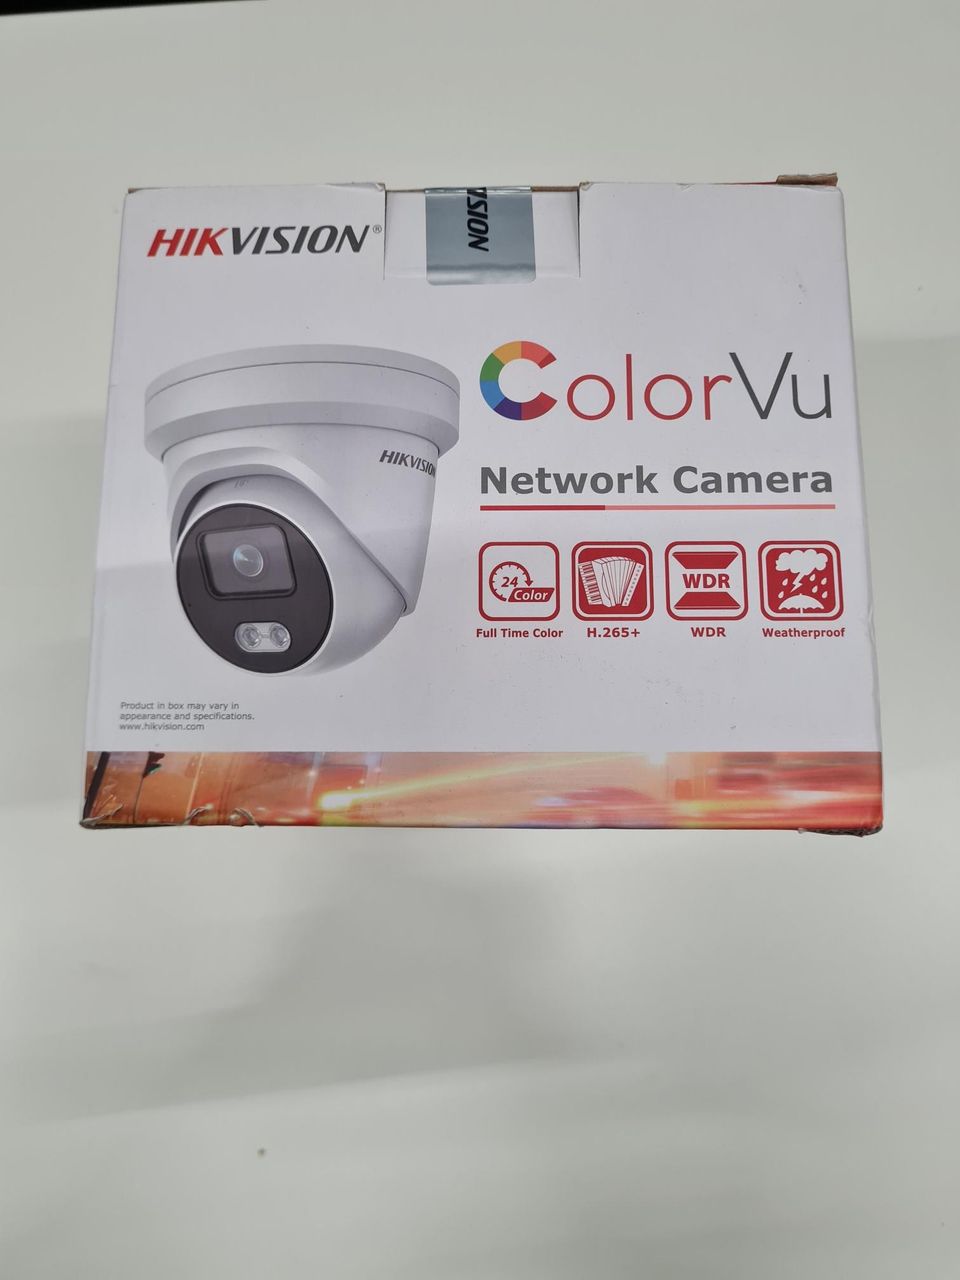 HiK-vision colorVu valvontakamera